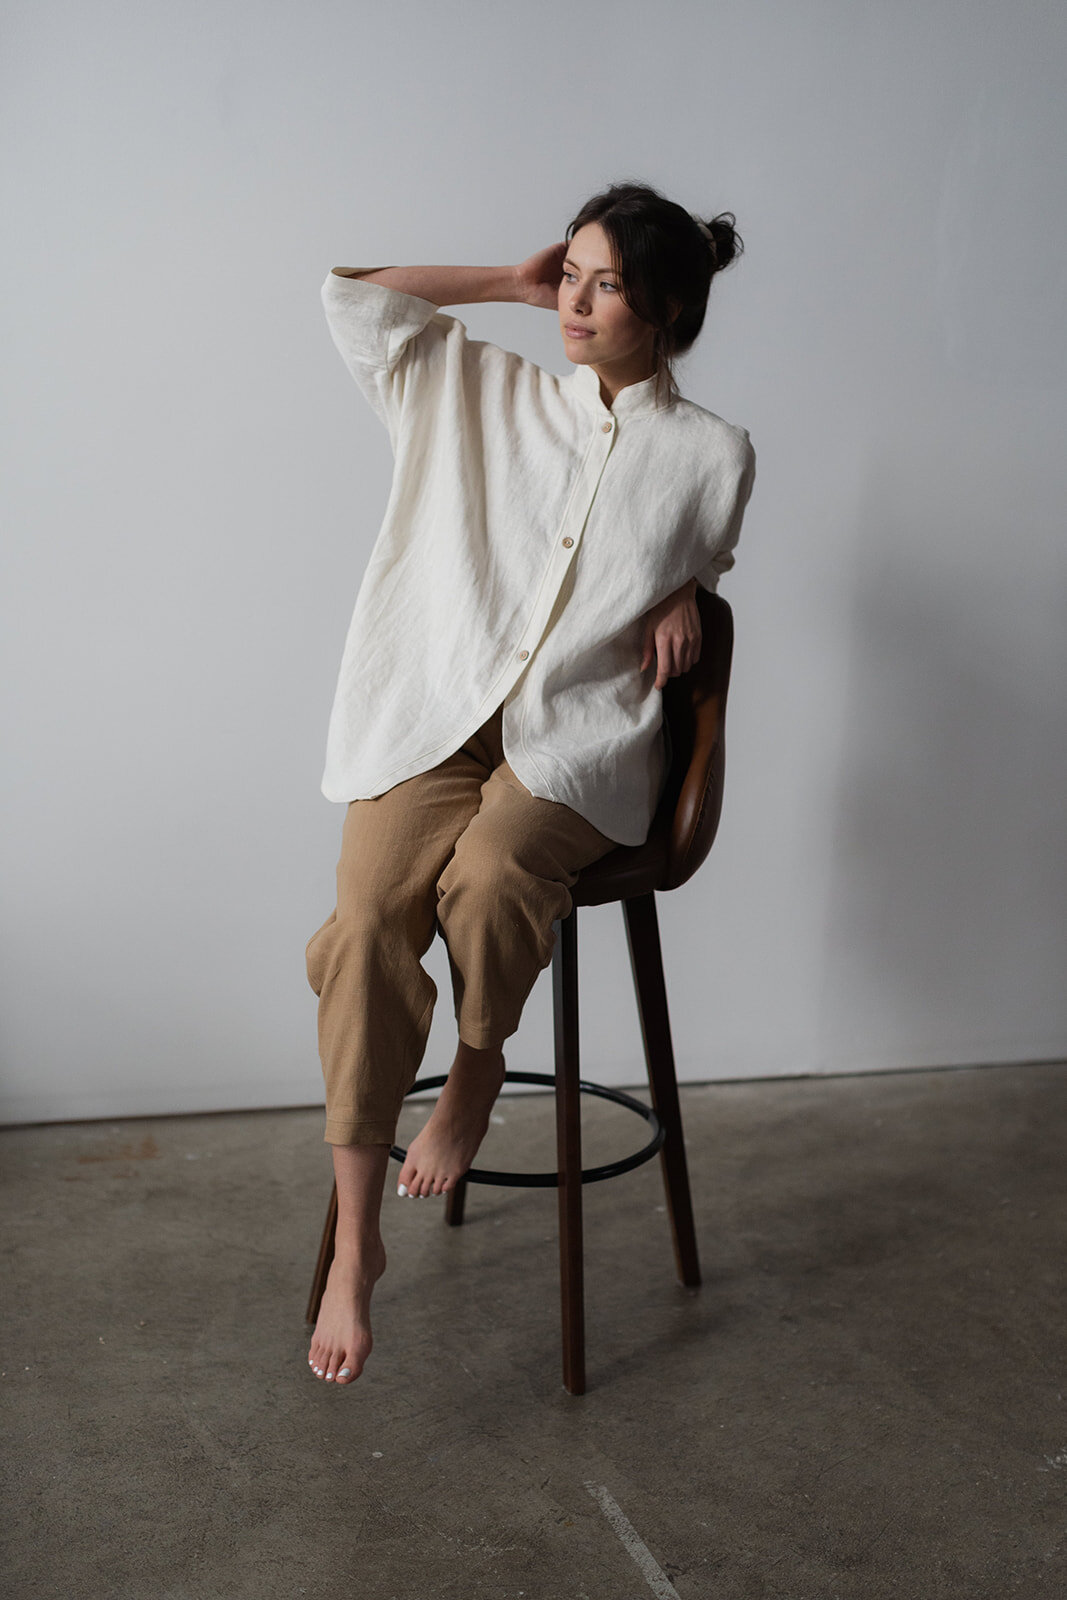 Nomi Designs - Linen clothing - Linen fashion designer - best linen clothing - spring 2021.jpg